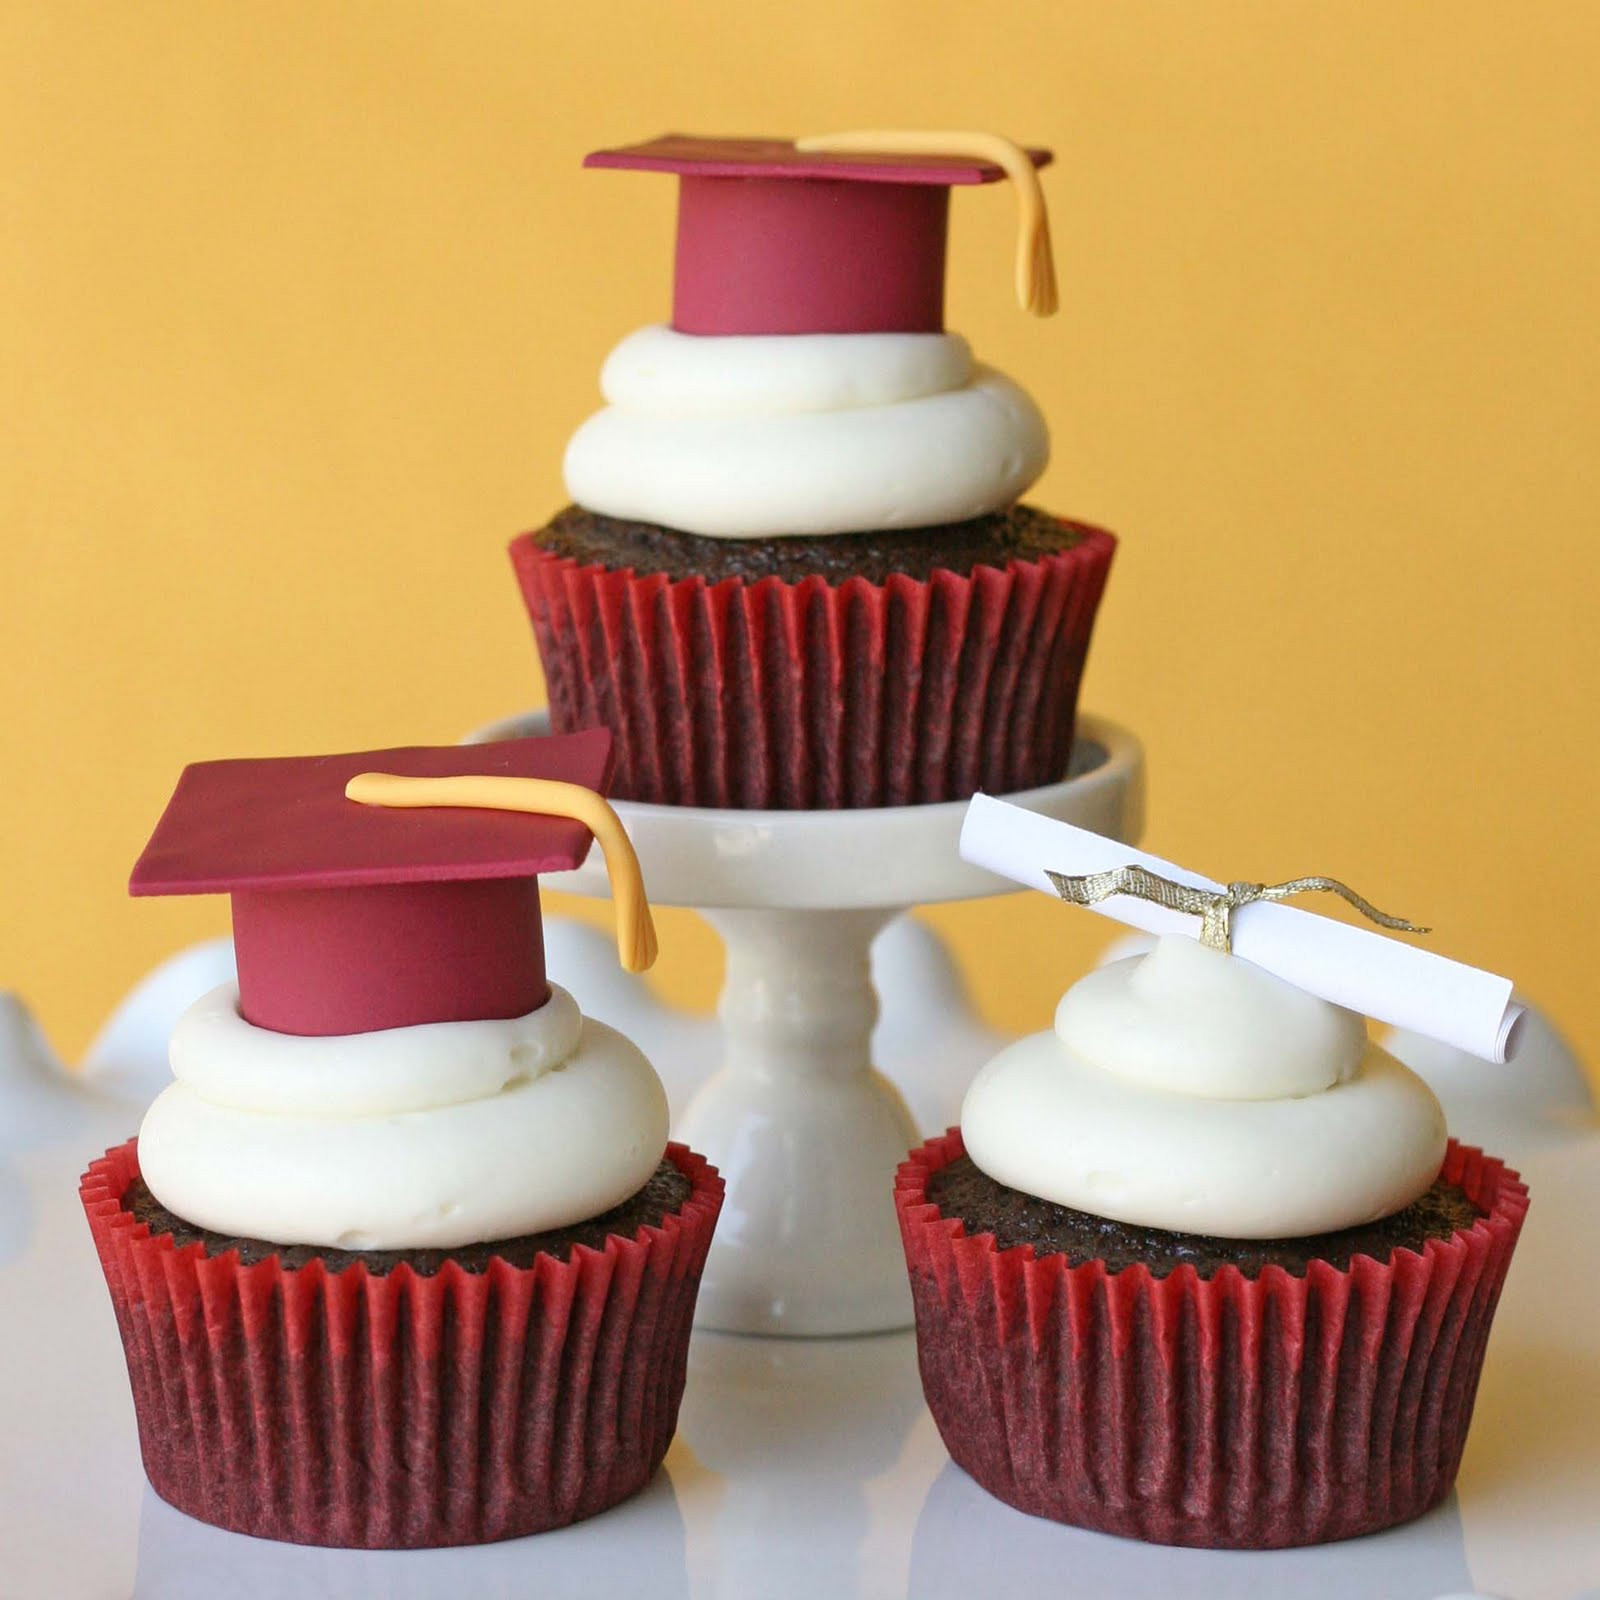 Graduation Cupcakes Decorating Ideas top 20 Graduation Cupcakes and How to Make Fondant Graduation